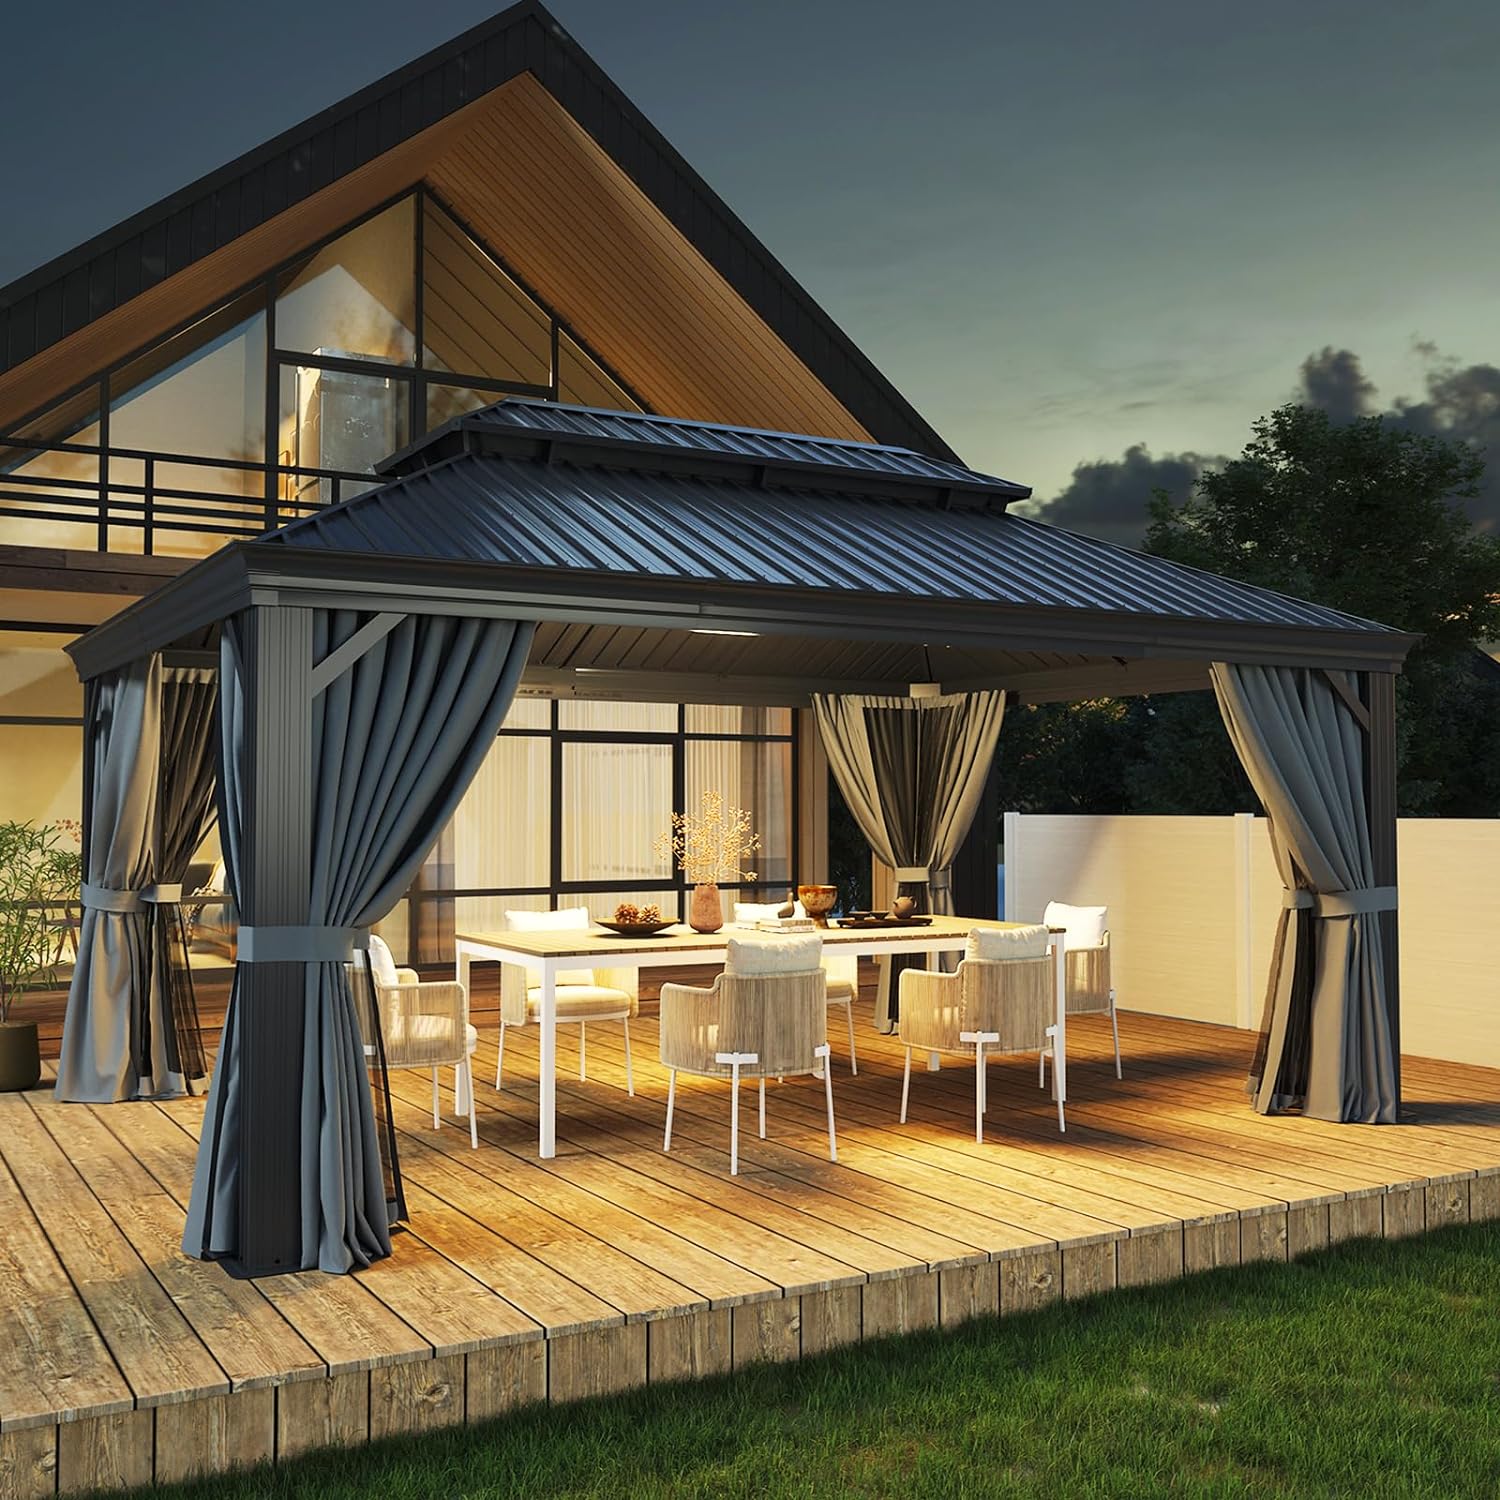 Luxury Hardtop Gazebo with Water Gutter, Galvanized Steel Double Roof, Permanent Aluminum Frame Gazebo